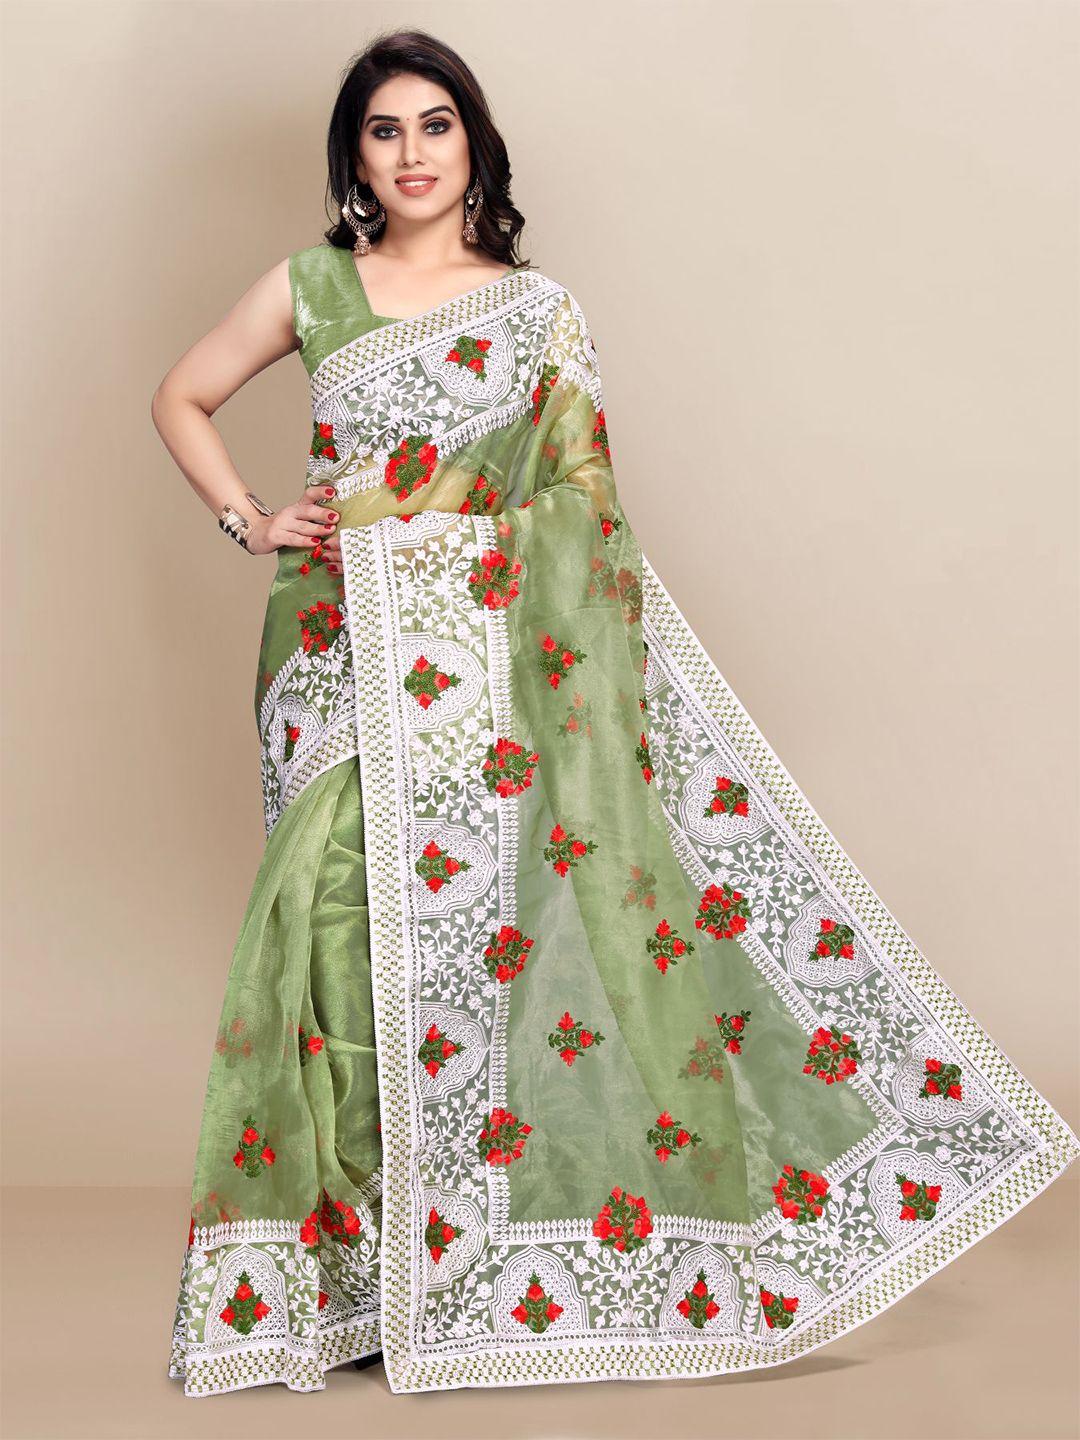 vairagee floral embroidered saree